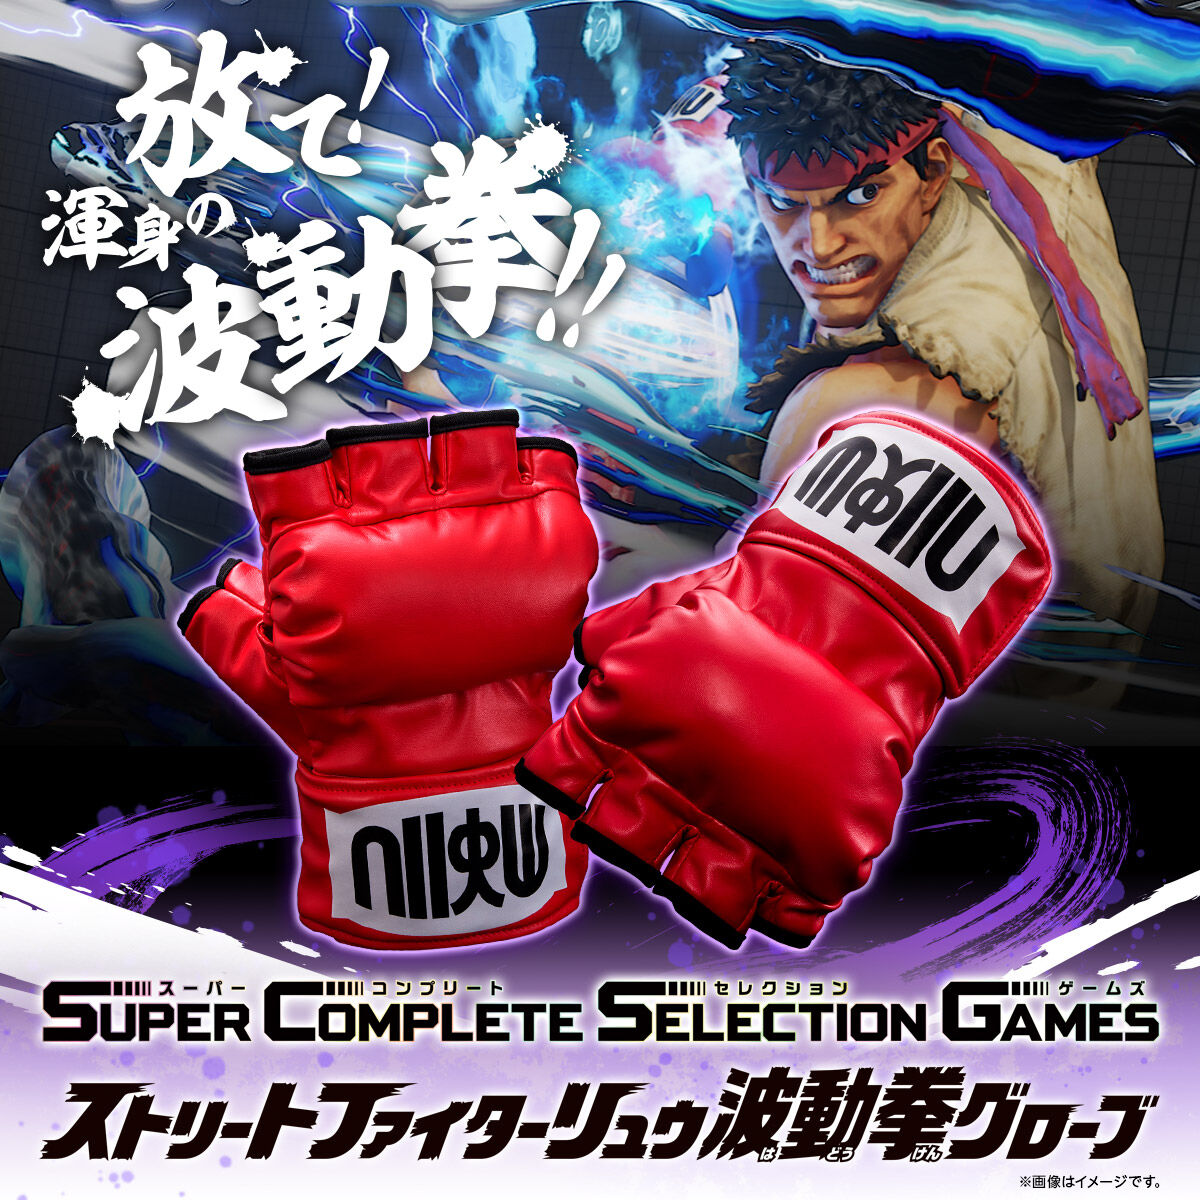 Super Complete Selection Games Ryu Hadouken Gloves